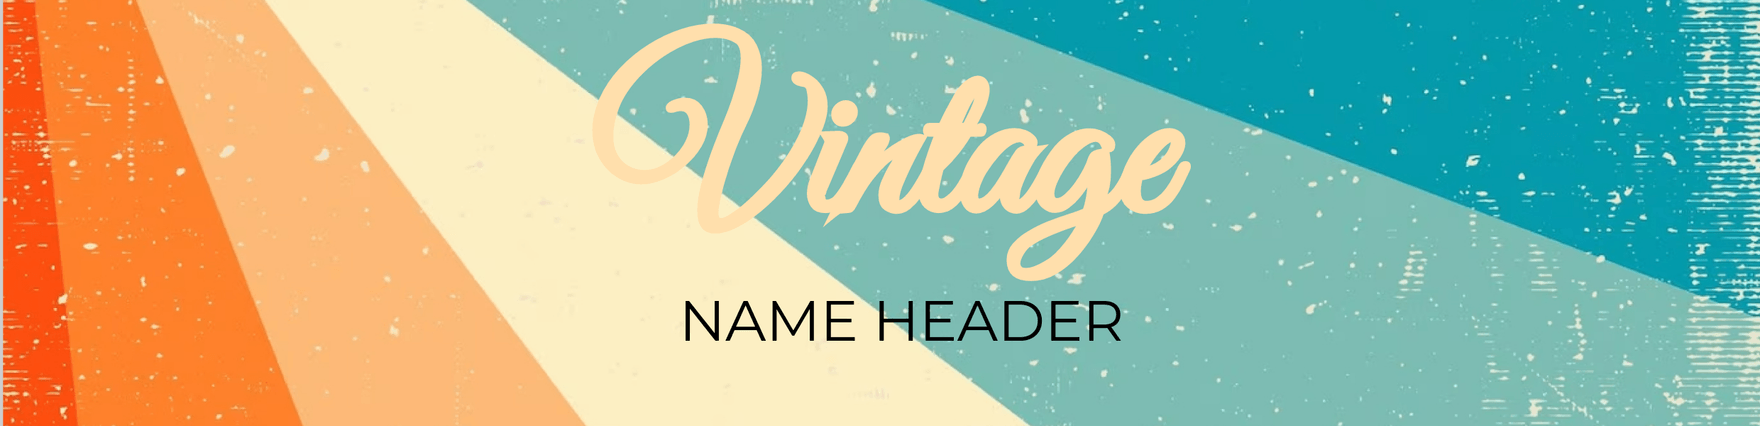 Vintage Name Header Template